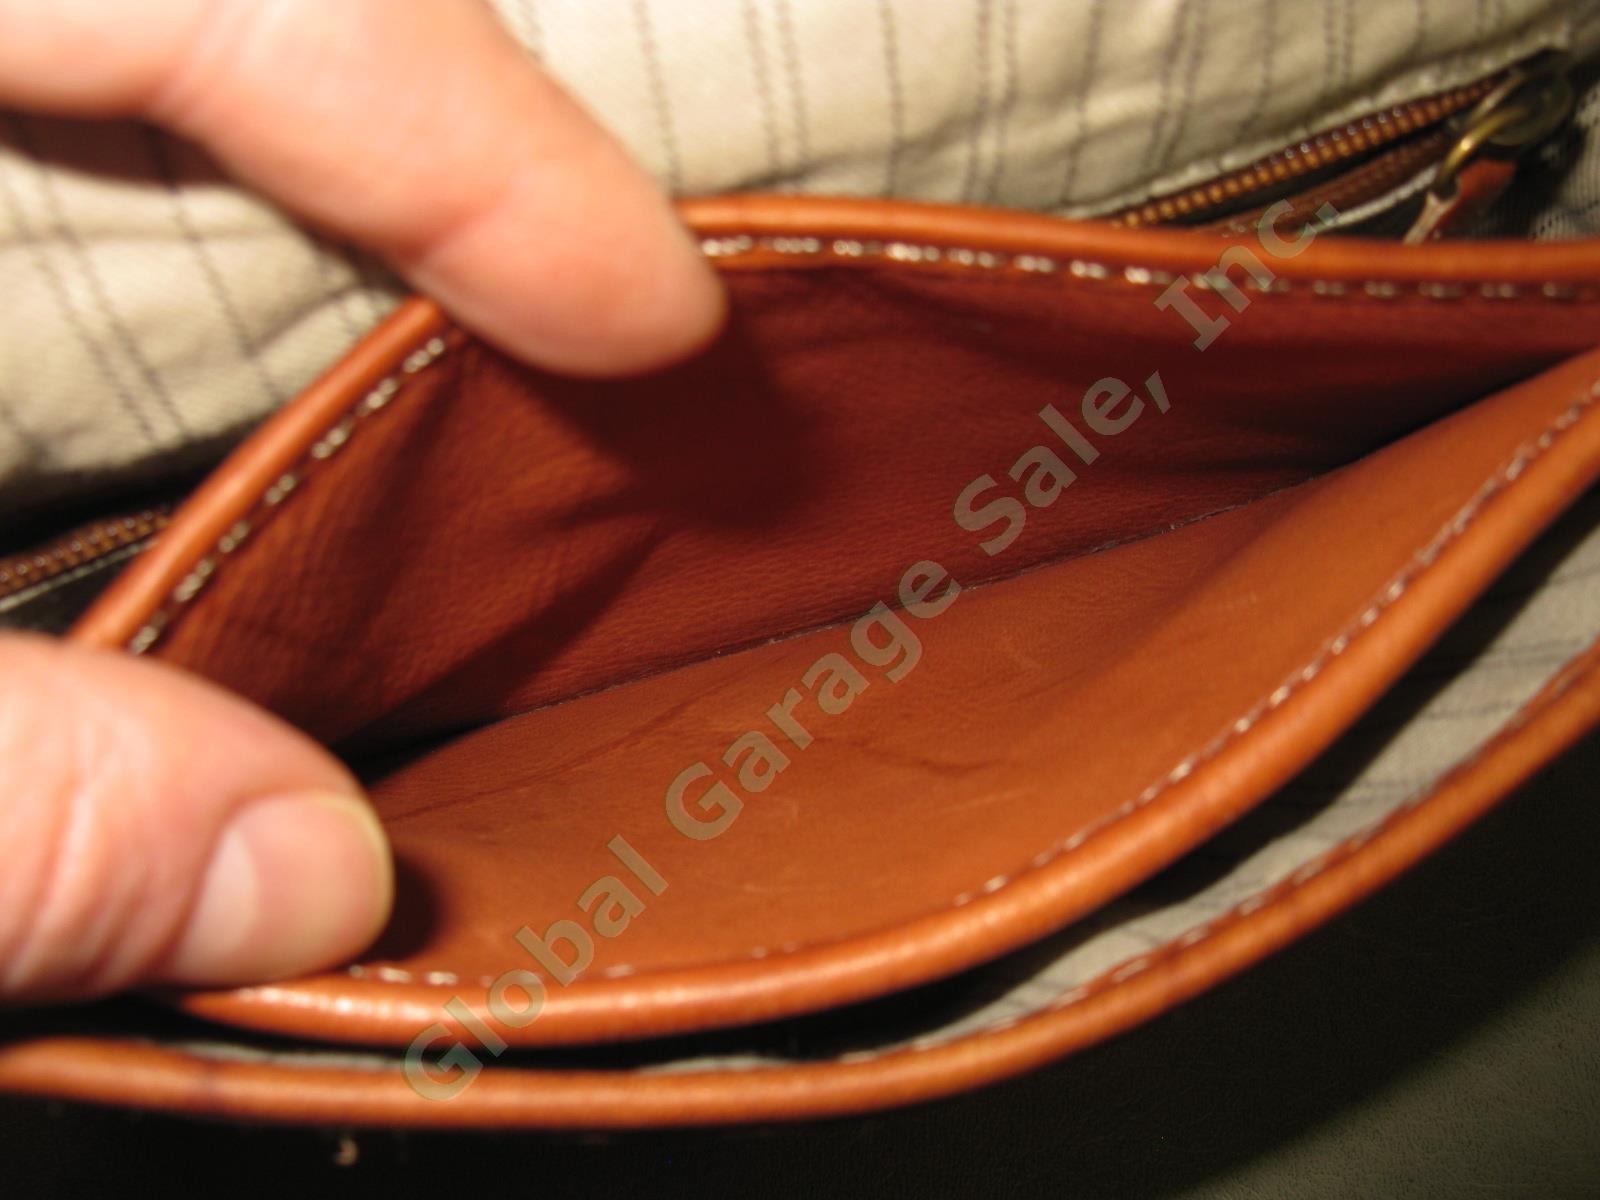 Frye Campus Saddle Cross Body Leather Handbag Clutch DB891 $298 Retail NORESERVE 7